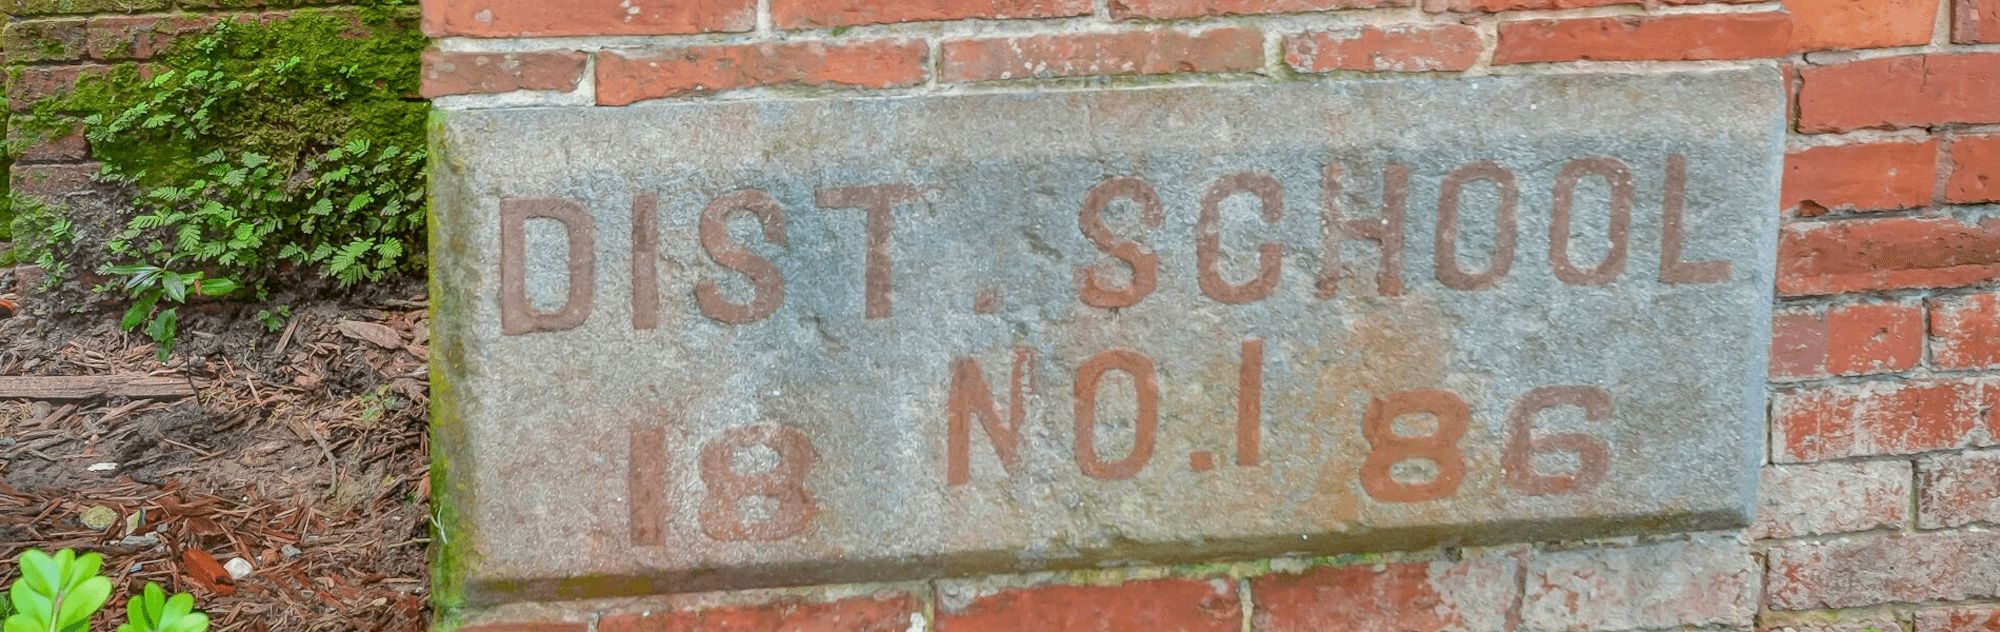 Amelia Schoolhouse district school 18 brick sign